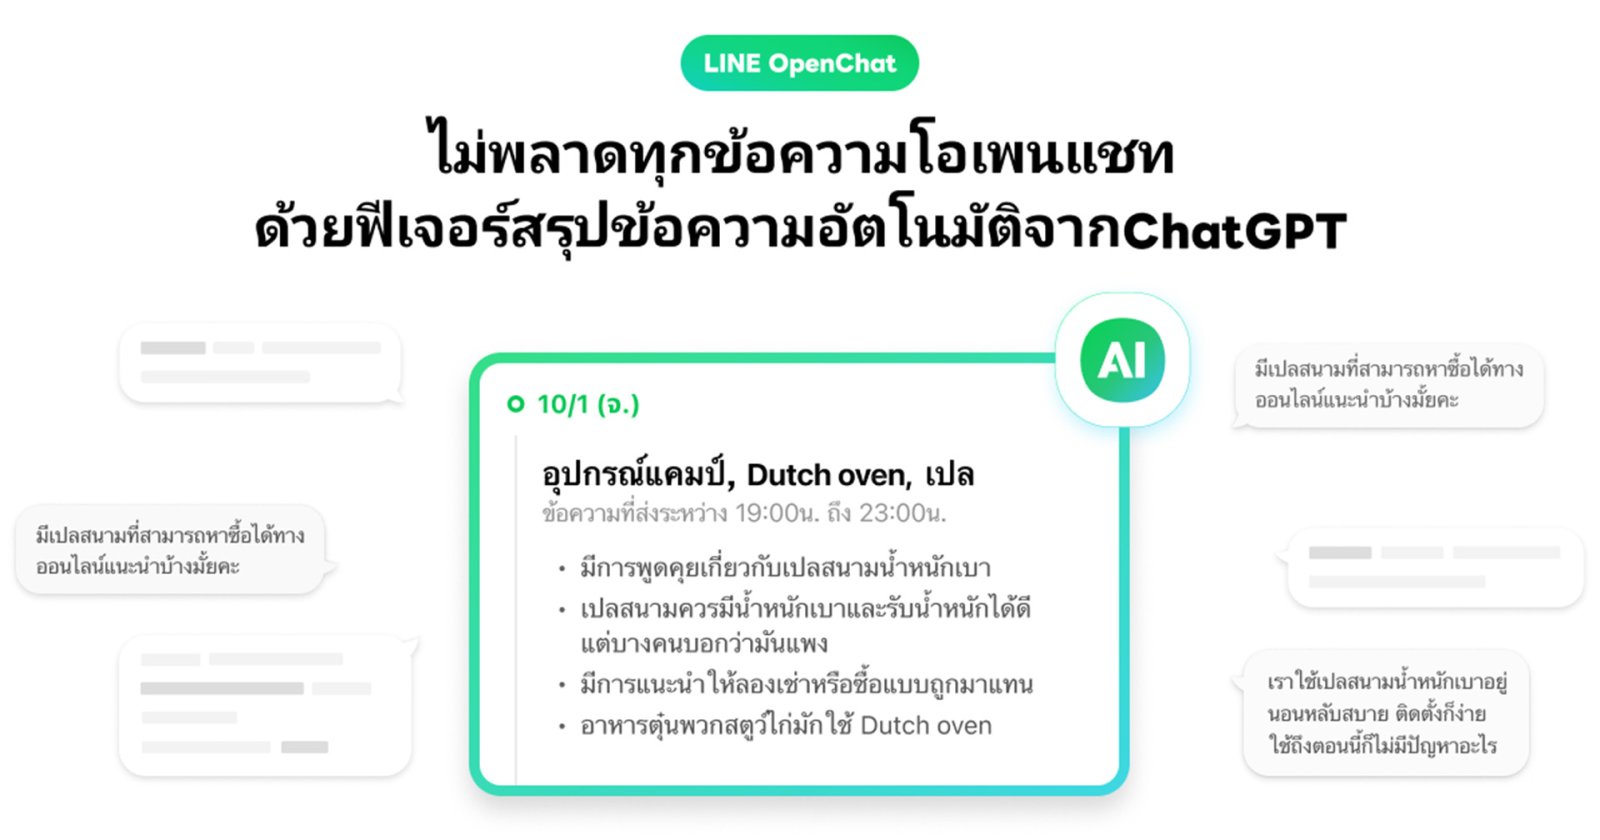 LINE OpenChat ปล่อยฟีเจอร์ใหม่ “Message Summary” สรุปเนื้อหาข้อความในโอเพนแชตด้วย AI